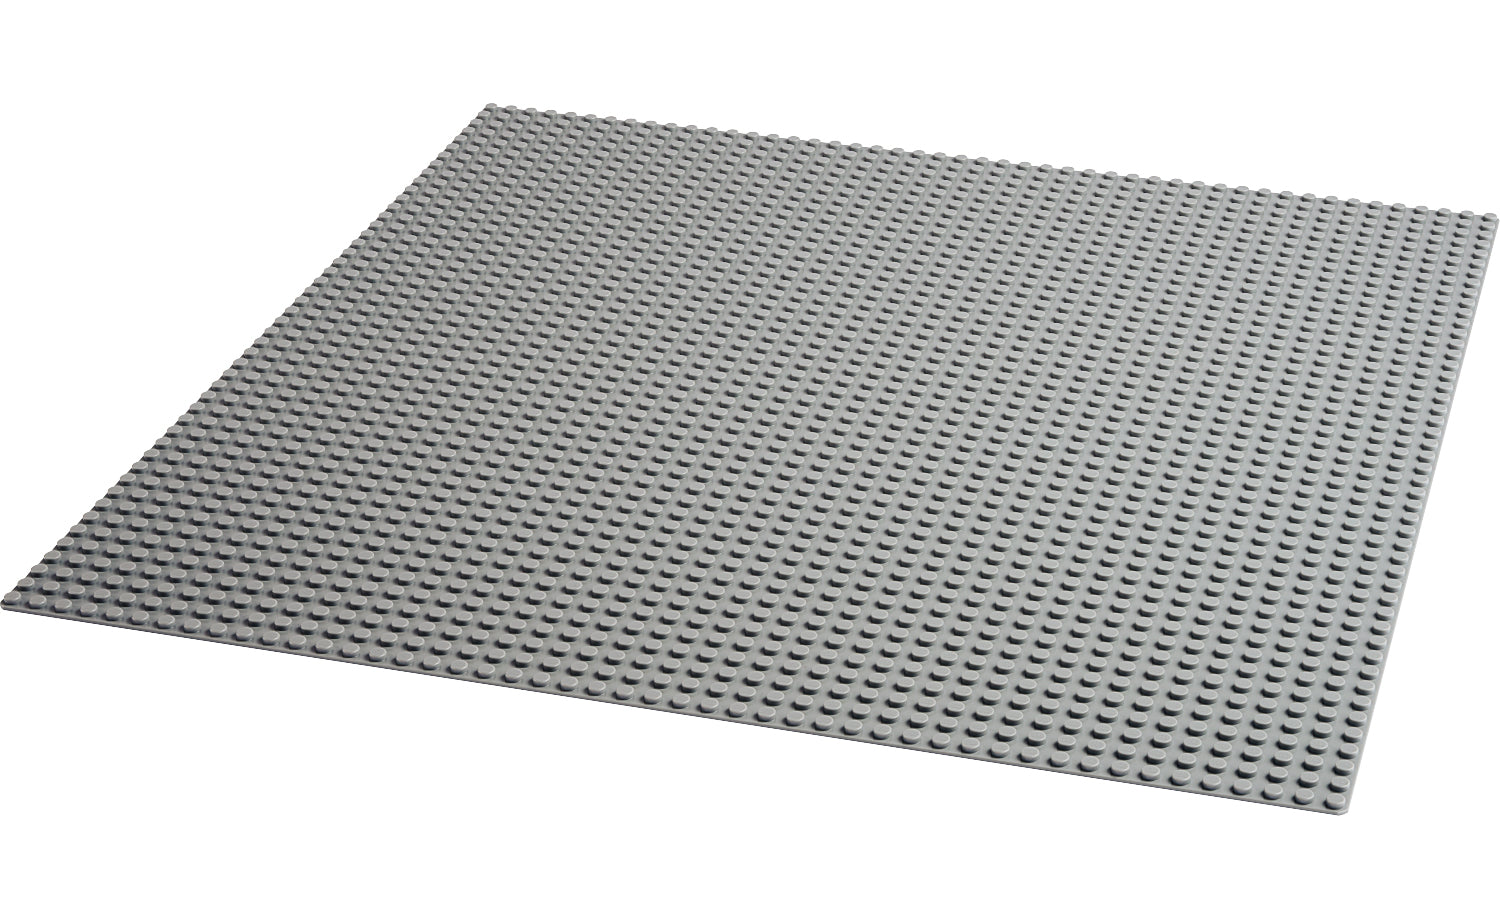 LEGO® Classic Grey Baseplate 11024